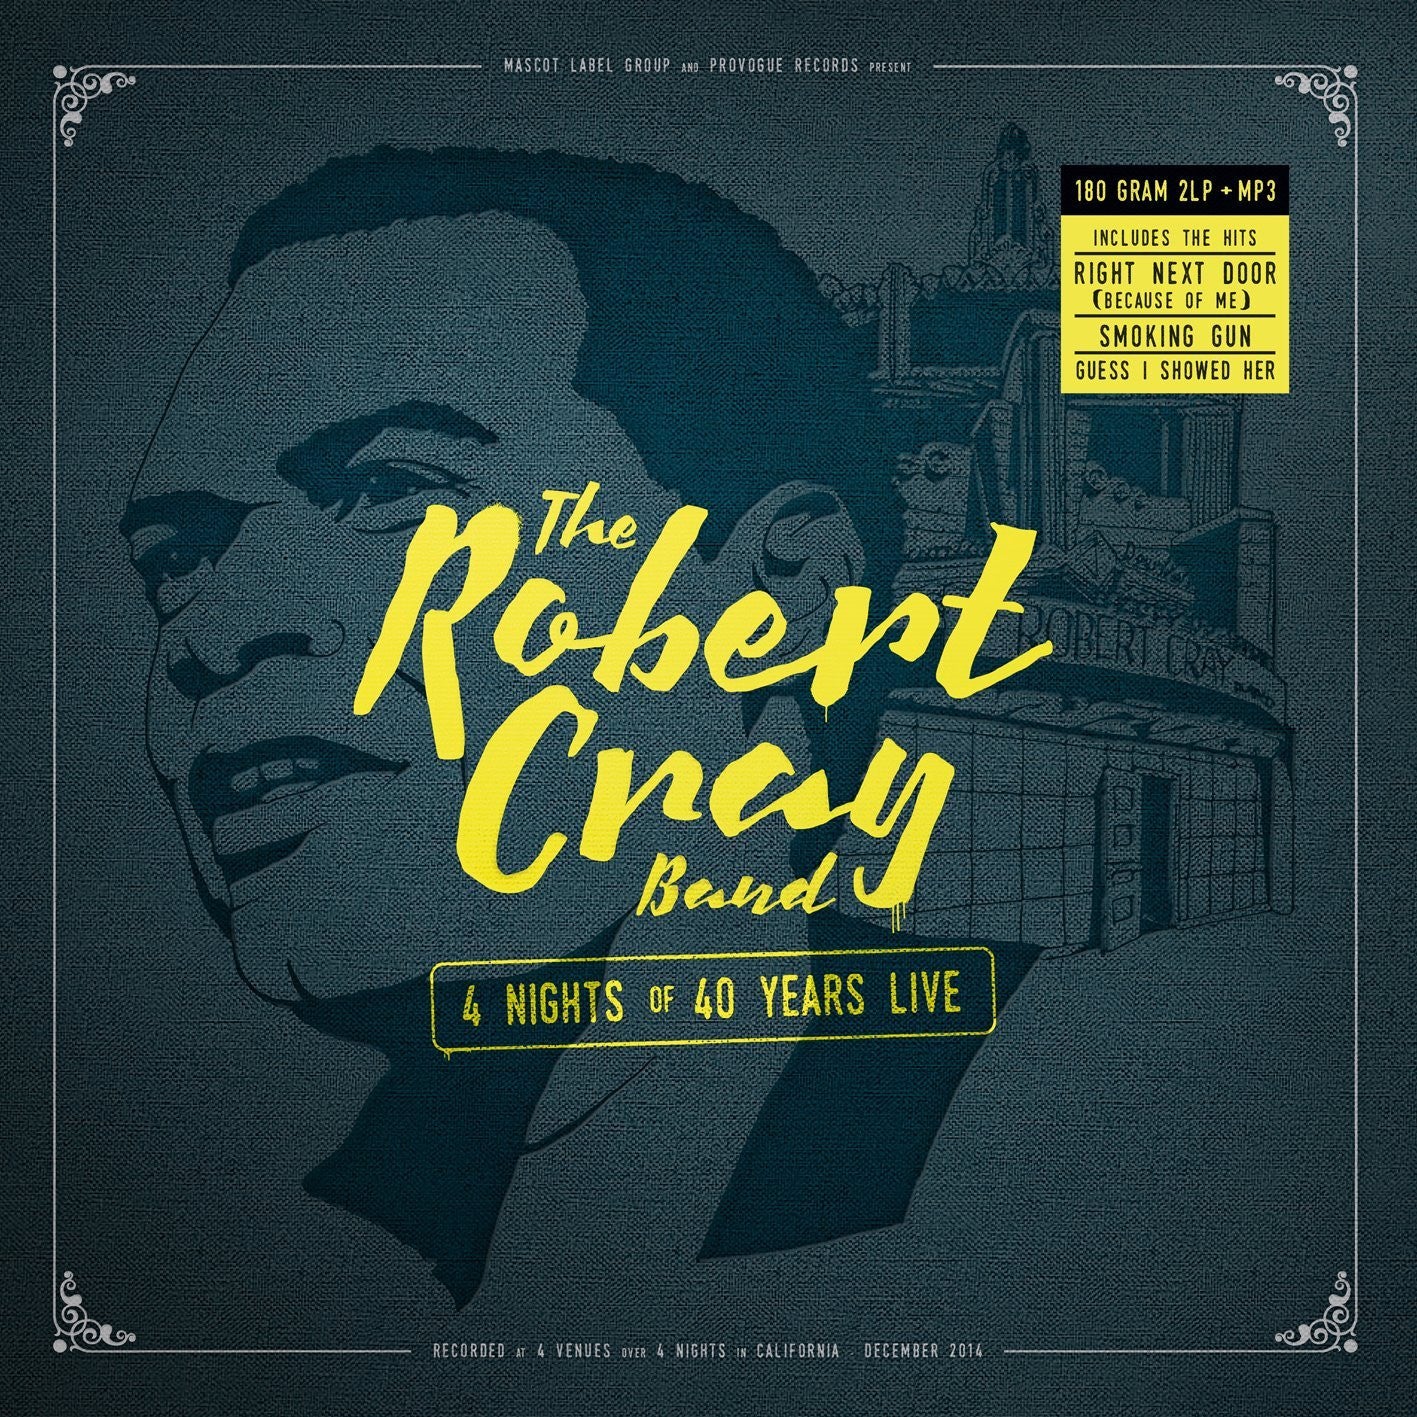 Cray, Robert - 4 Nights of 40 Tears Live